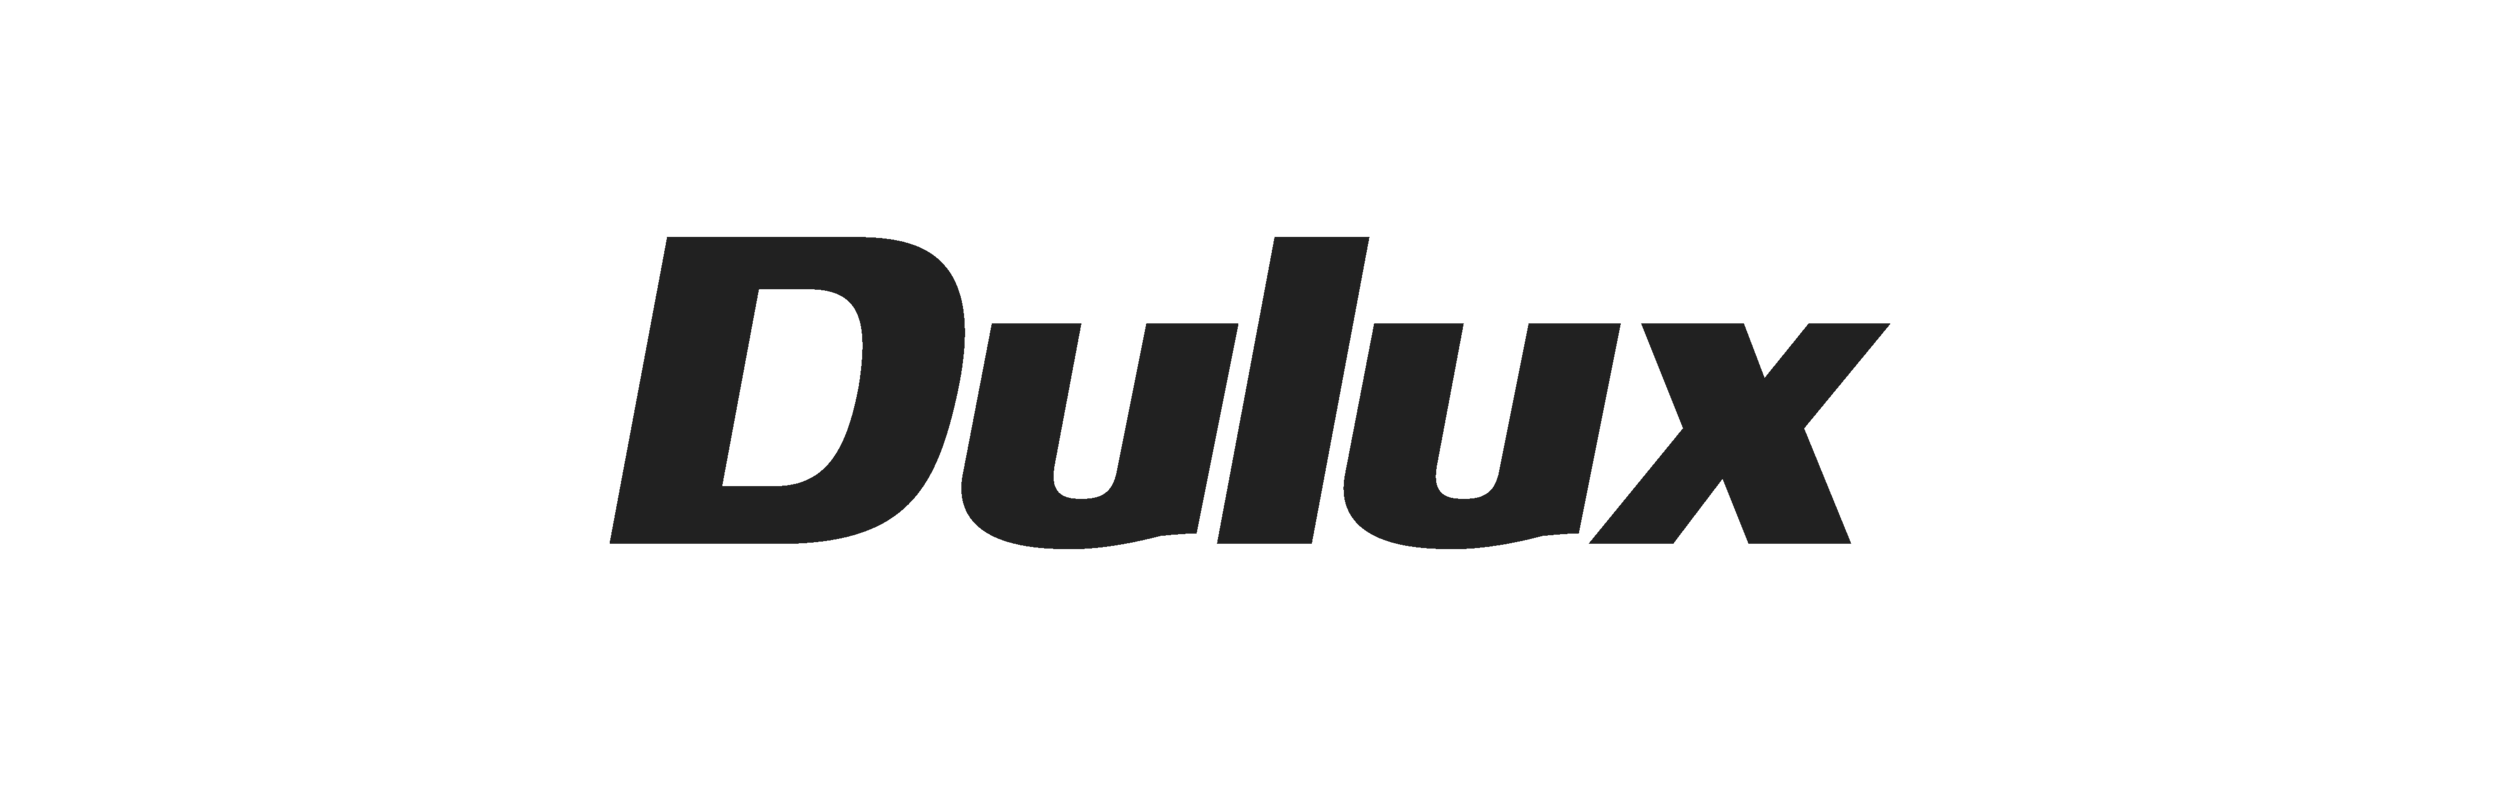 SM_Dulux logo.png